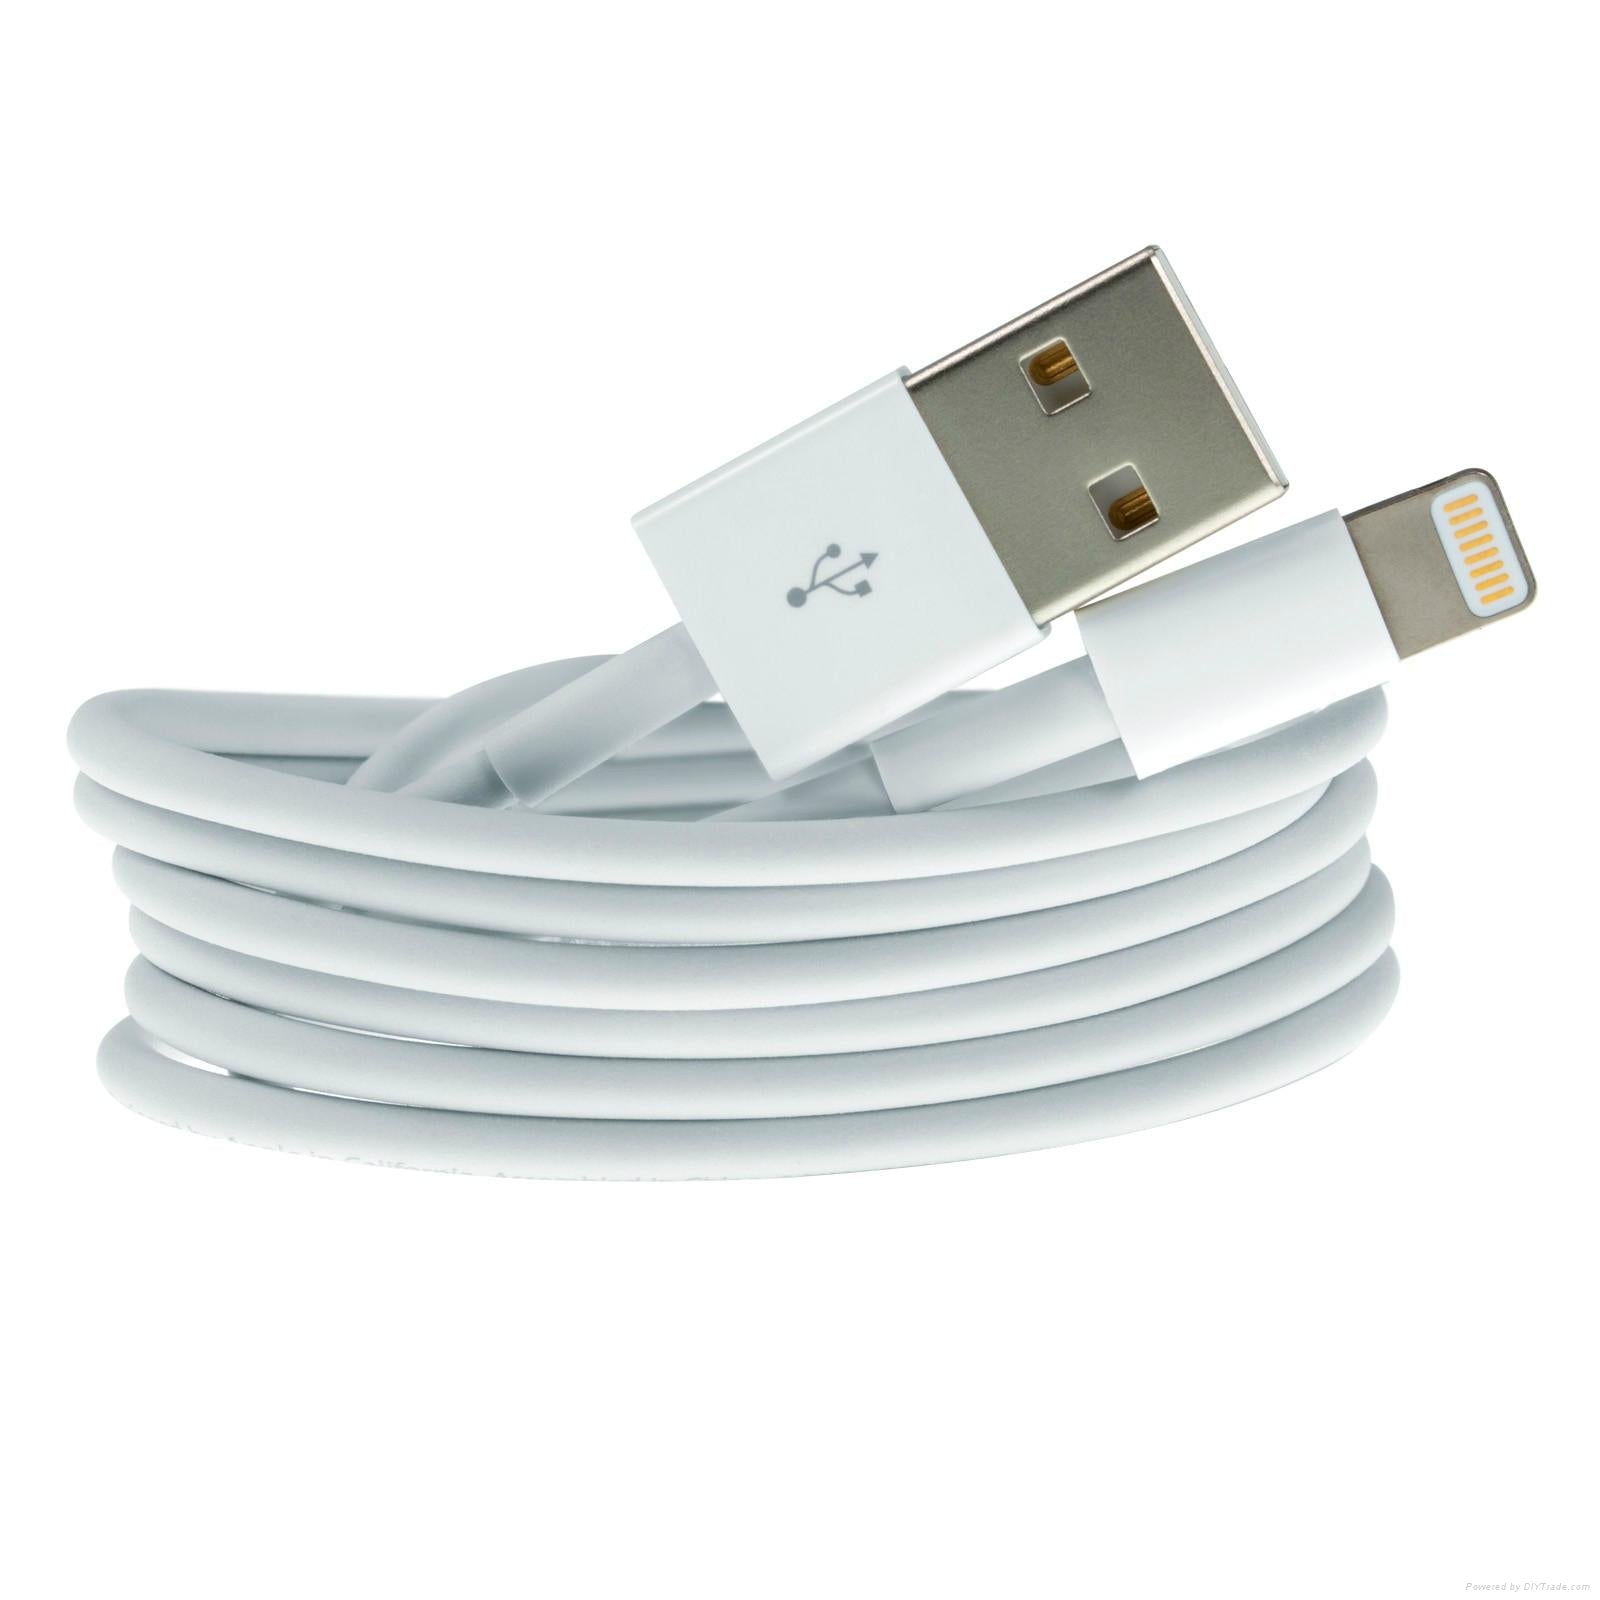 Usb iphone 5. Кабель USB - Lightning Apple iphone Original 1.0 м White 869036. Кабель юсб Лайтинг iphone. Провод эпл Лайтнинг. Кабель USB-Lightning для iphone, IPAD (1м).